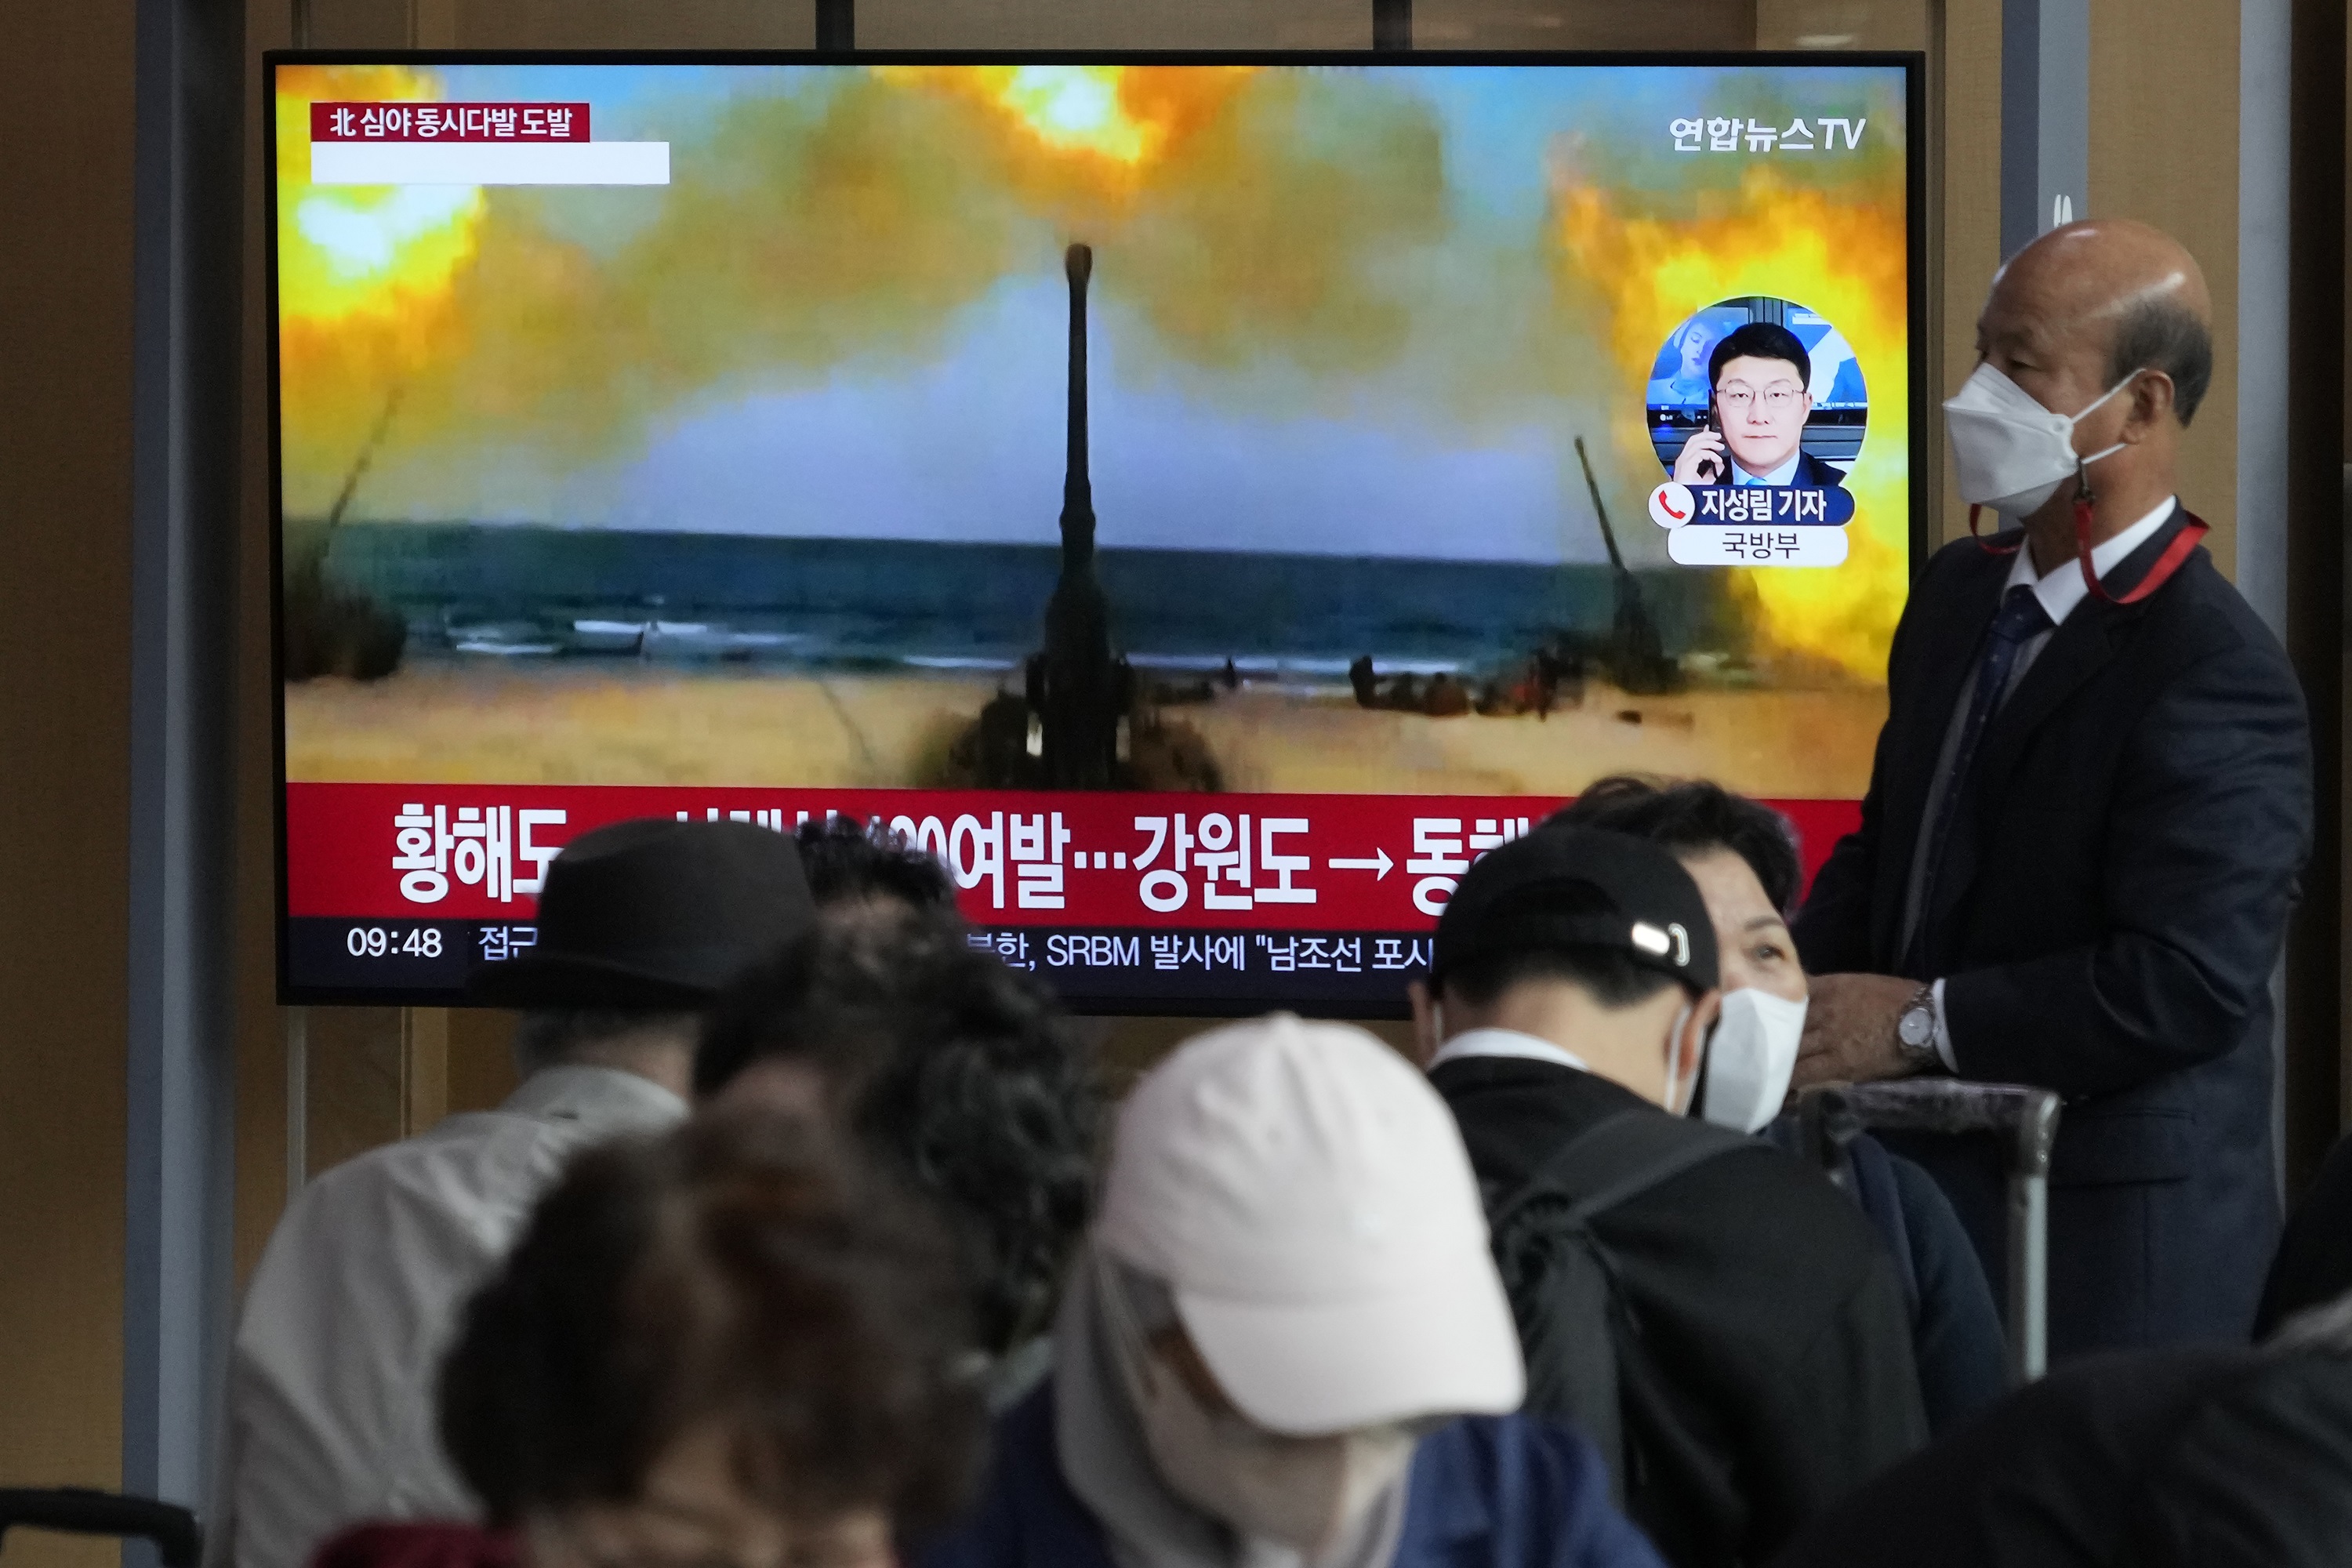 North Korea Fires Artillery Again Over South Korea’s Drills